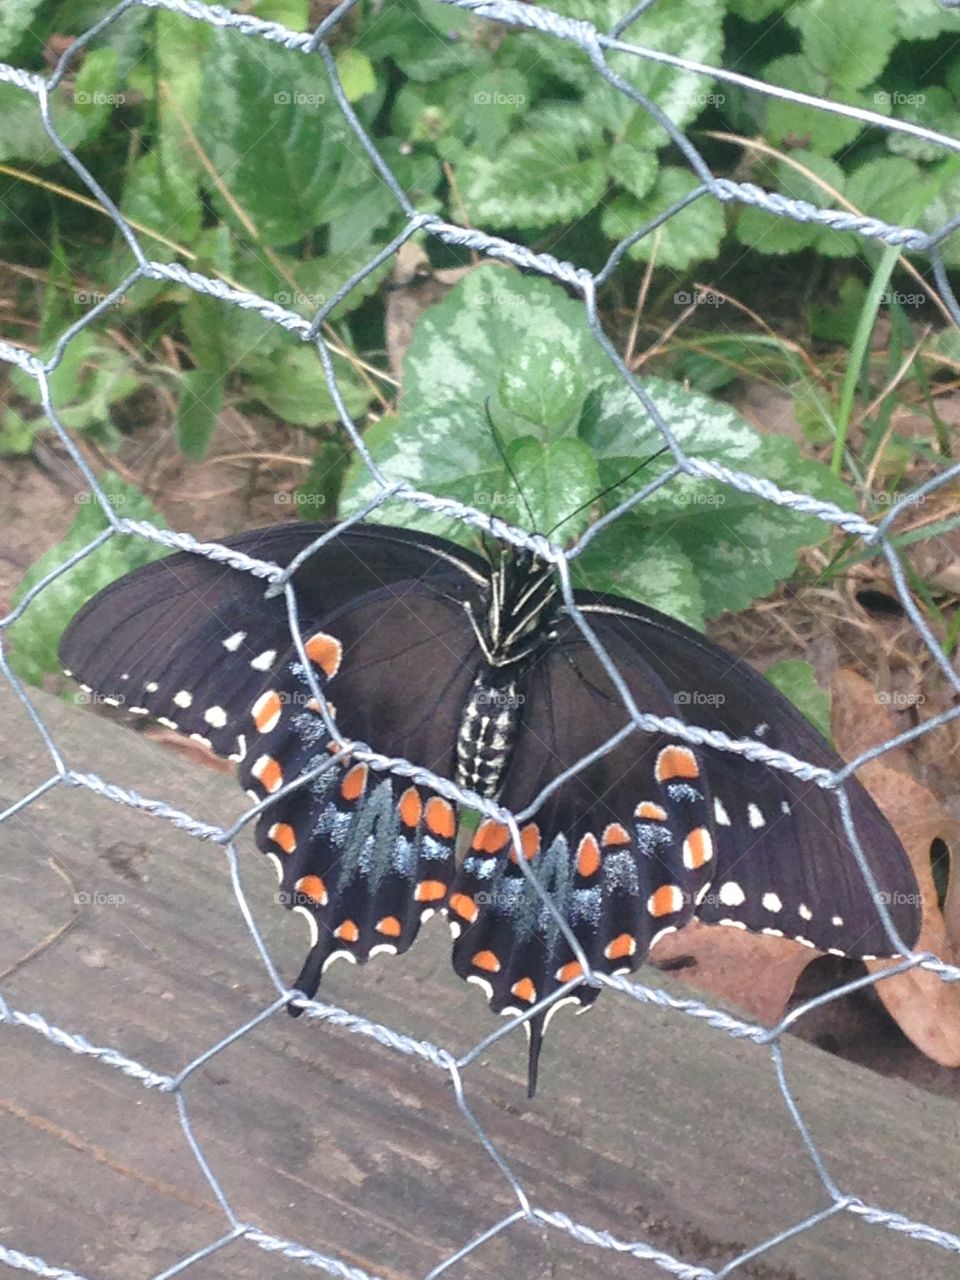 Butterfly bliss